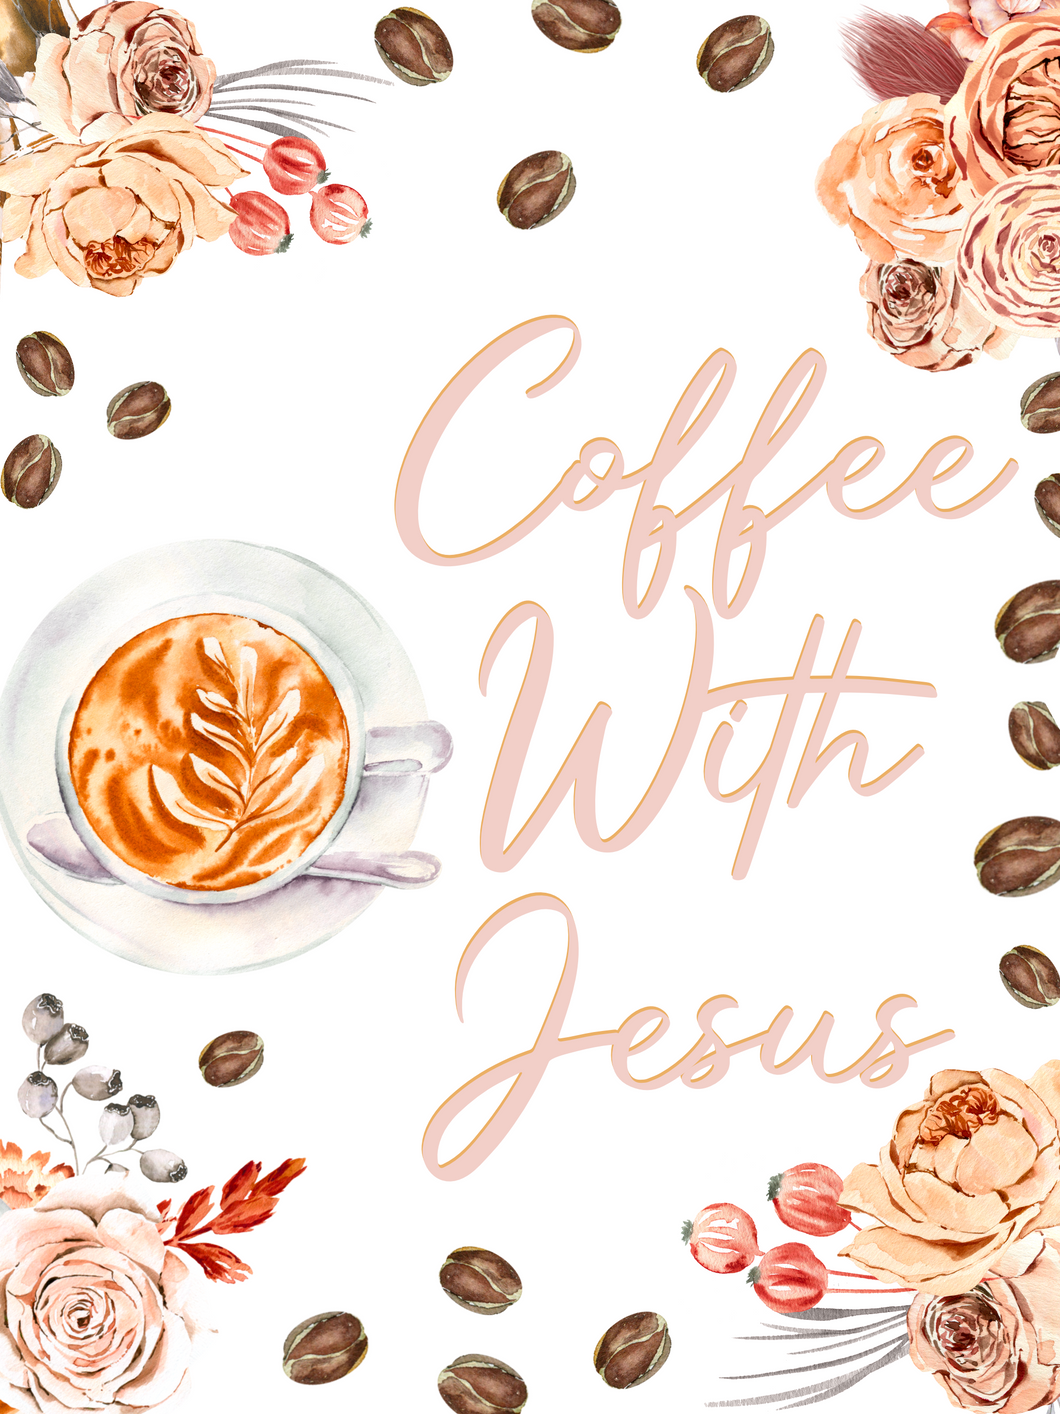 Coffee With Jesus